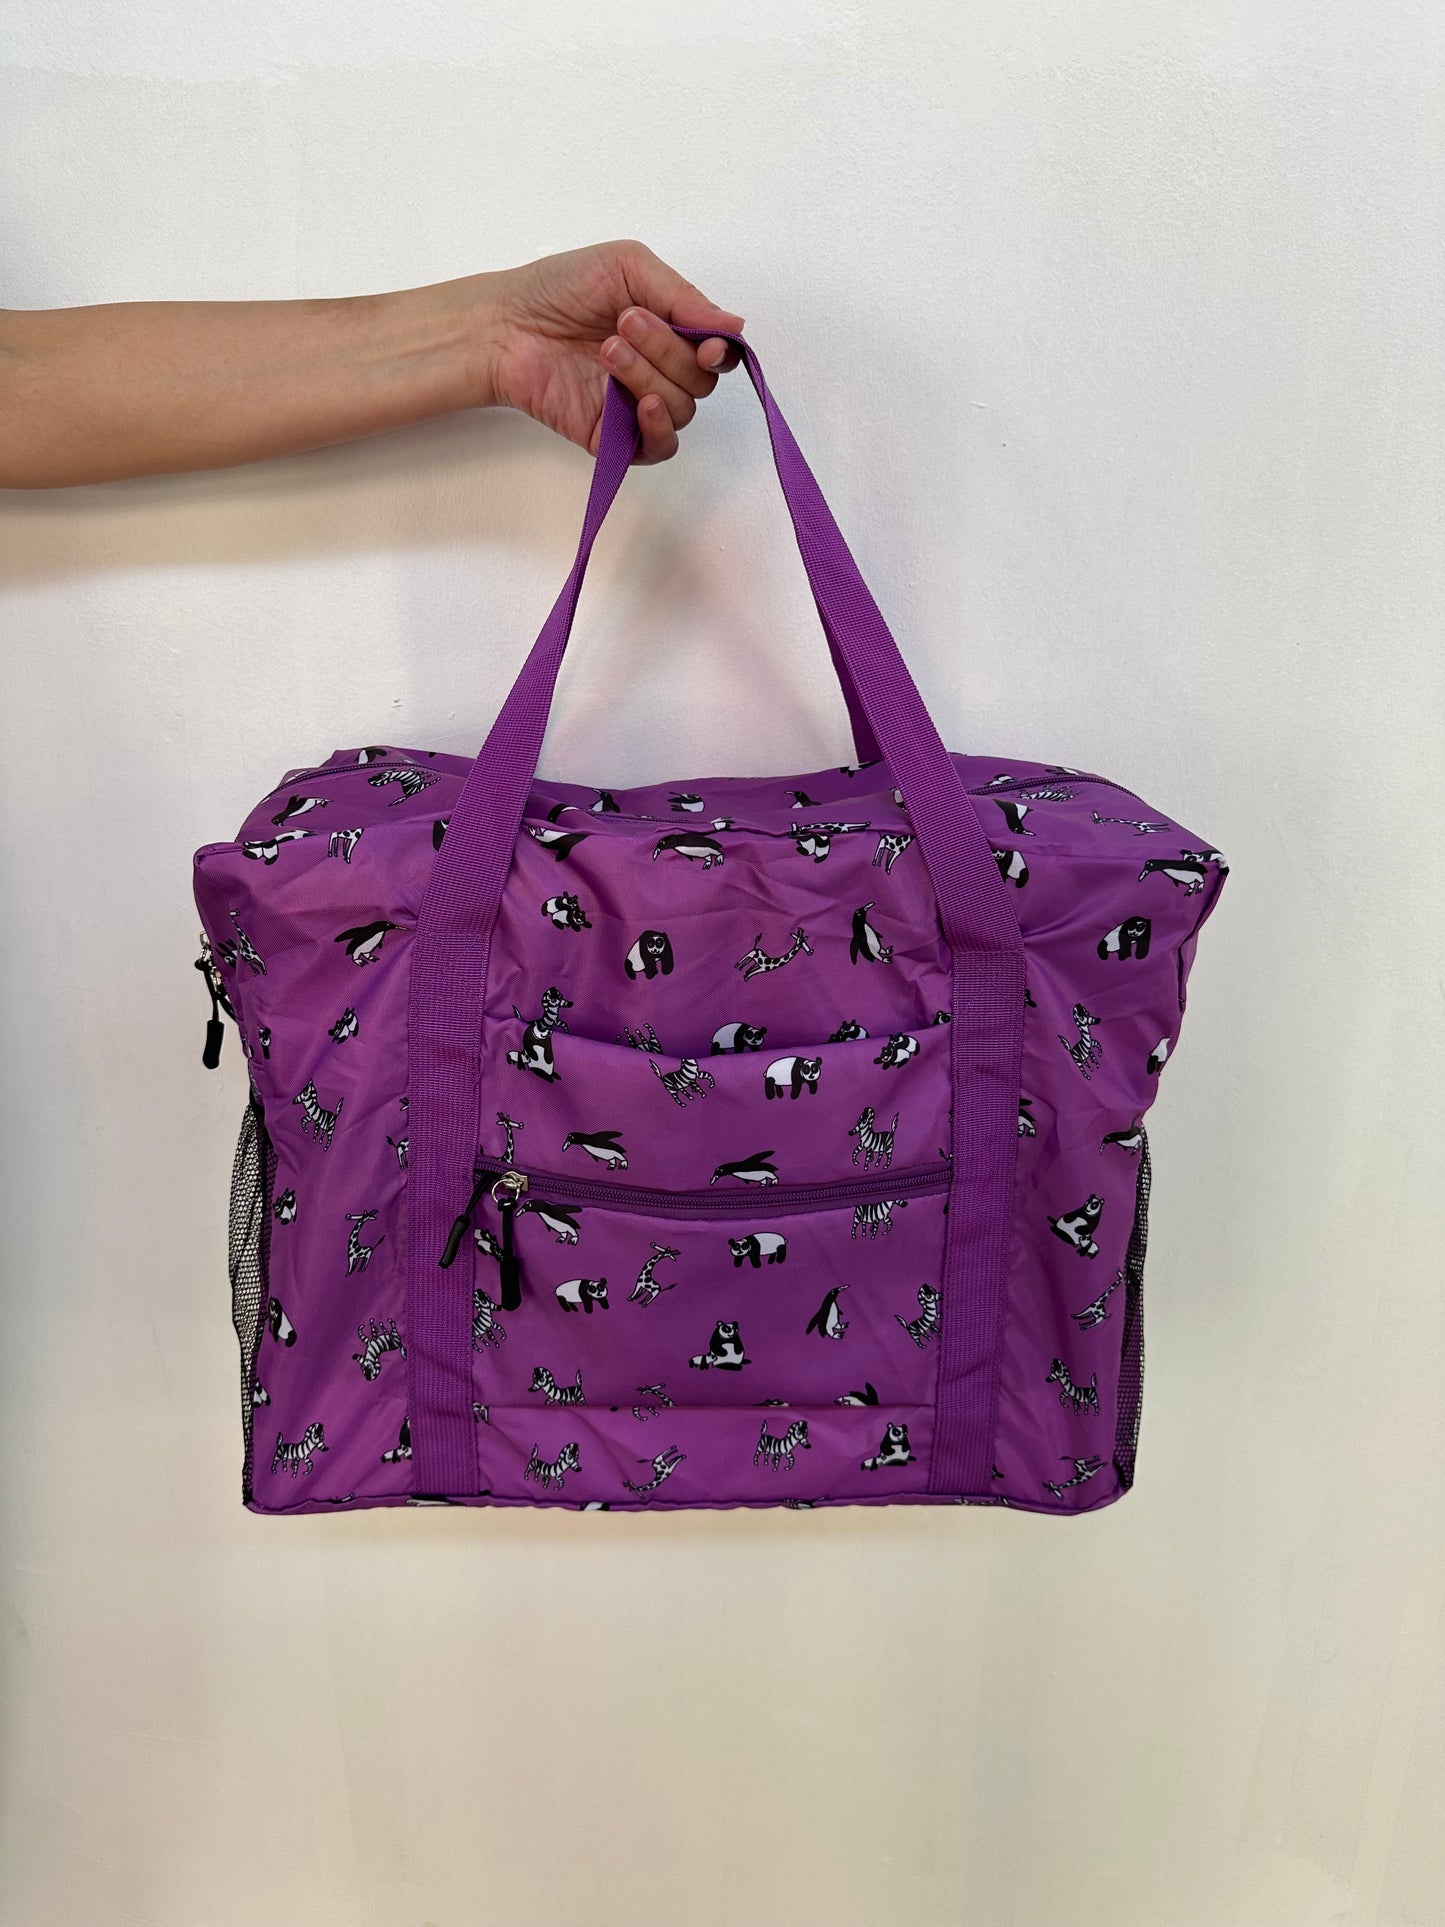 Foldable Travel Bag (Purple) - B&W Animals